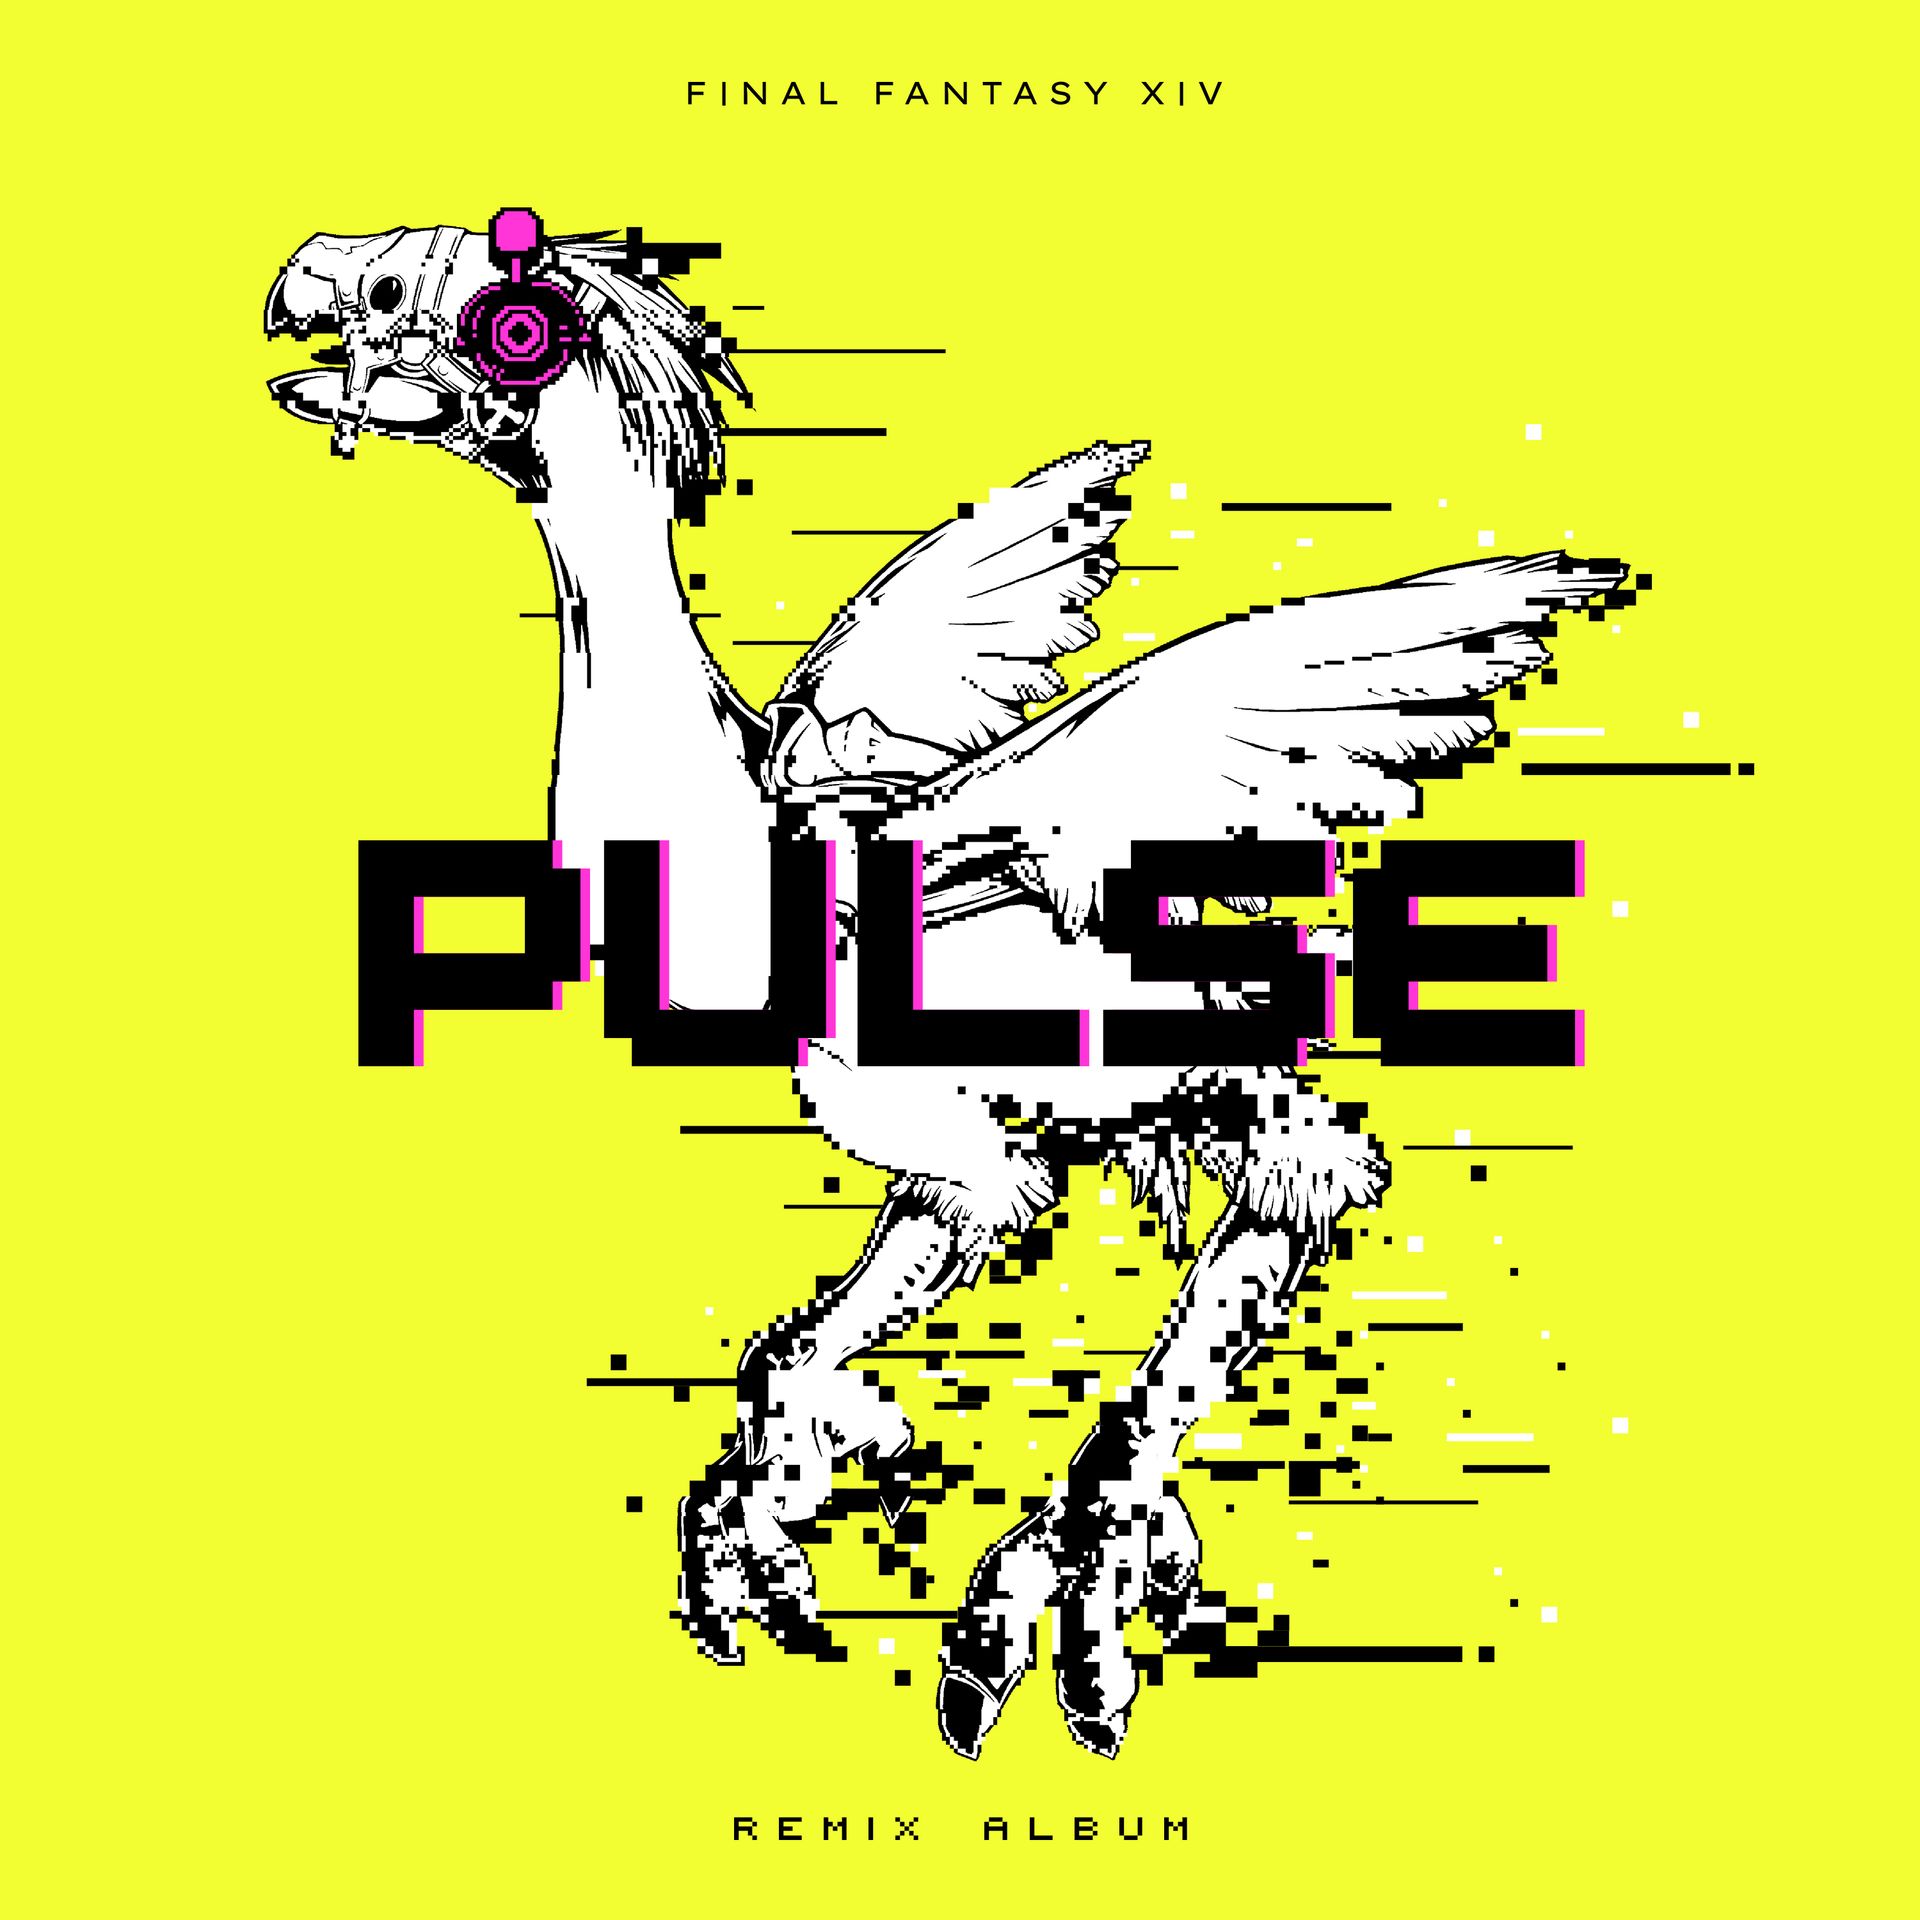 Ffxiv のリミックスアルバム Pulse Final Fantasy Xiv Remix Album 発売決定 Game Watch